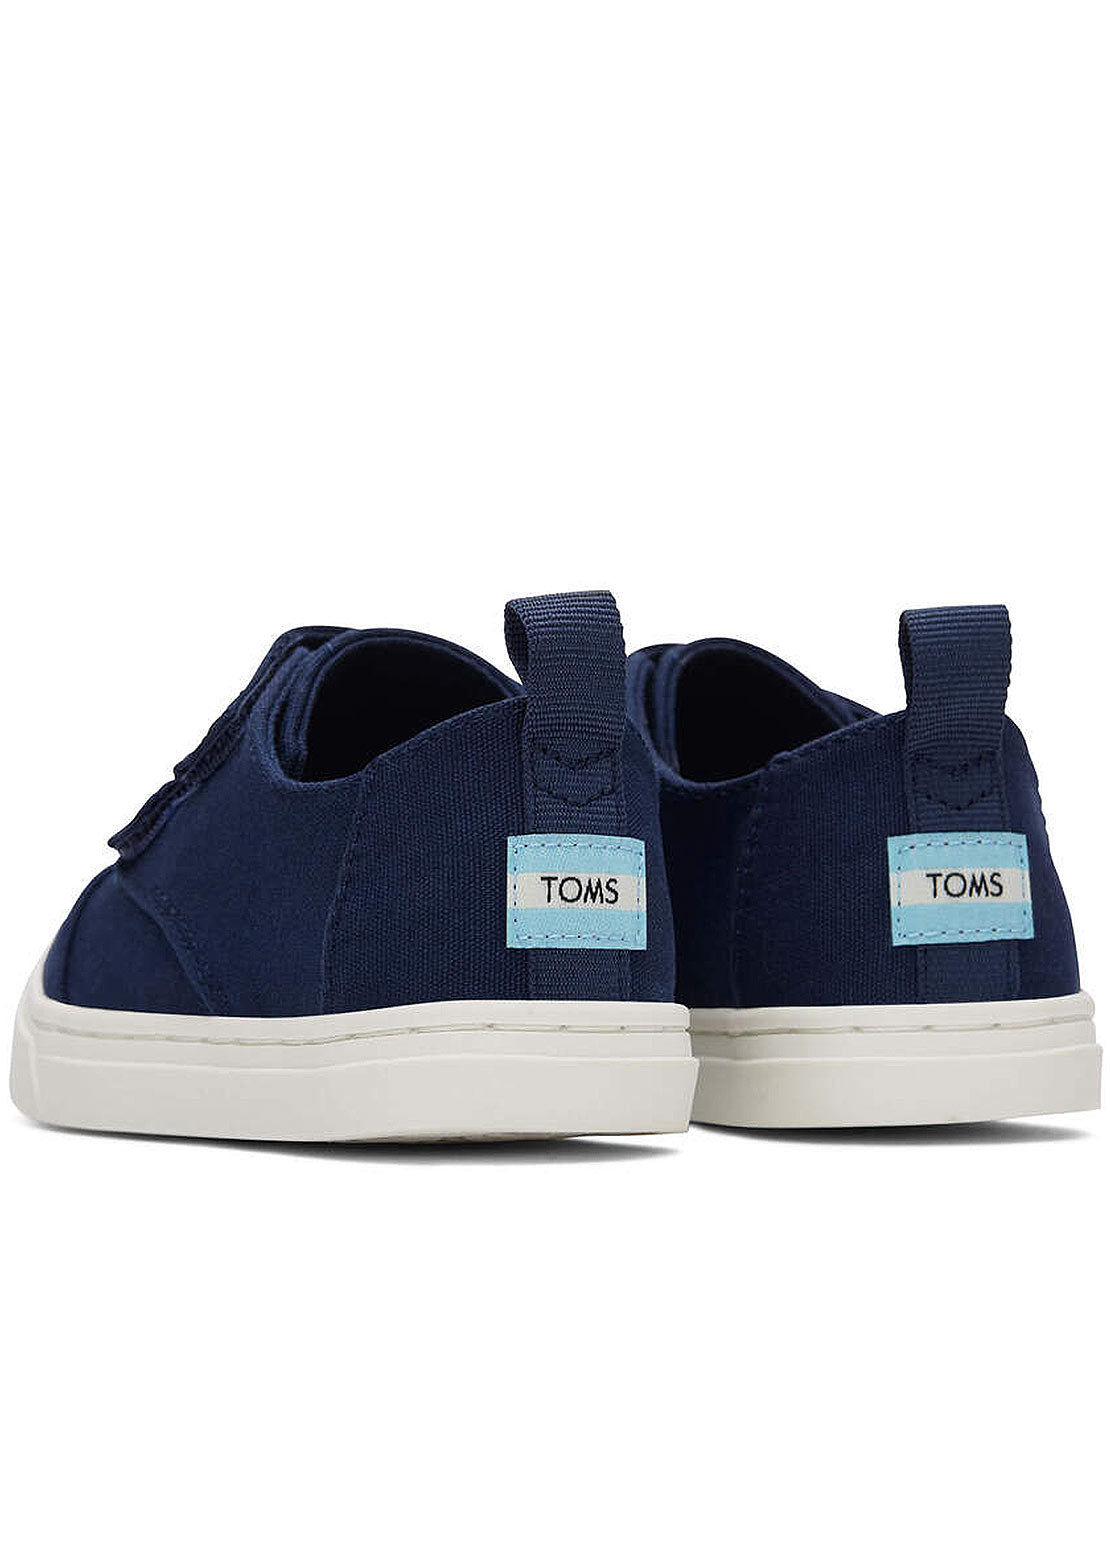 Toms Junior Fenix Double Strap Casual Sneakers Navy